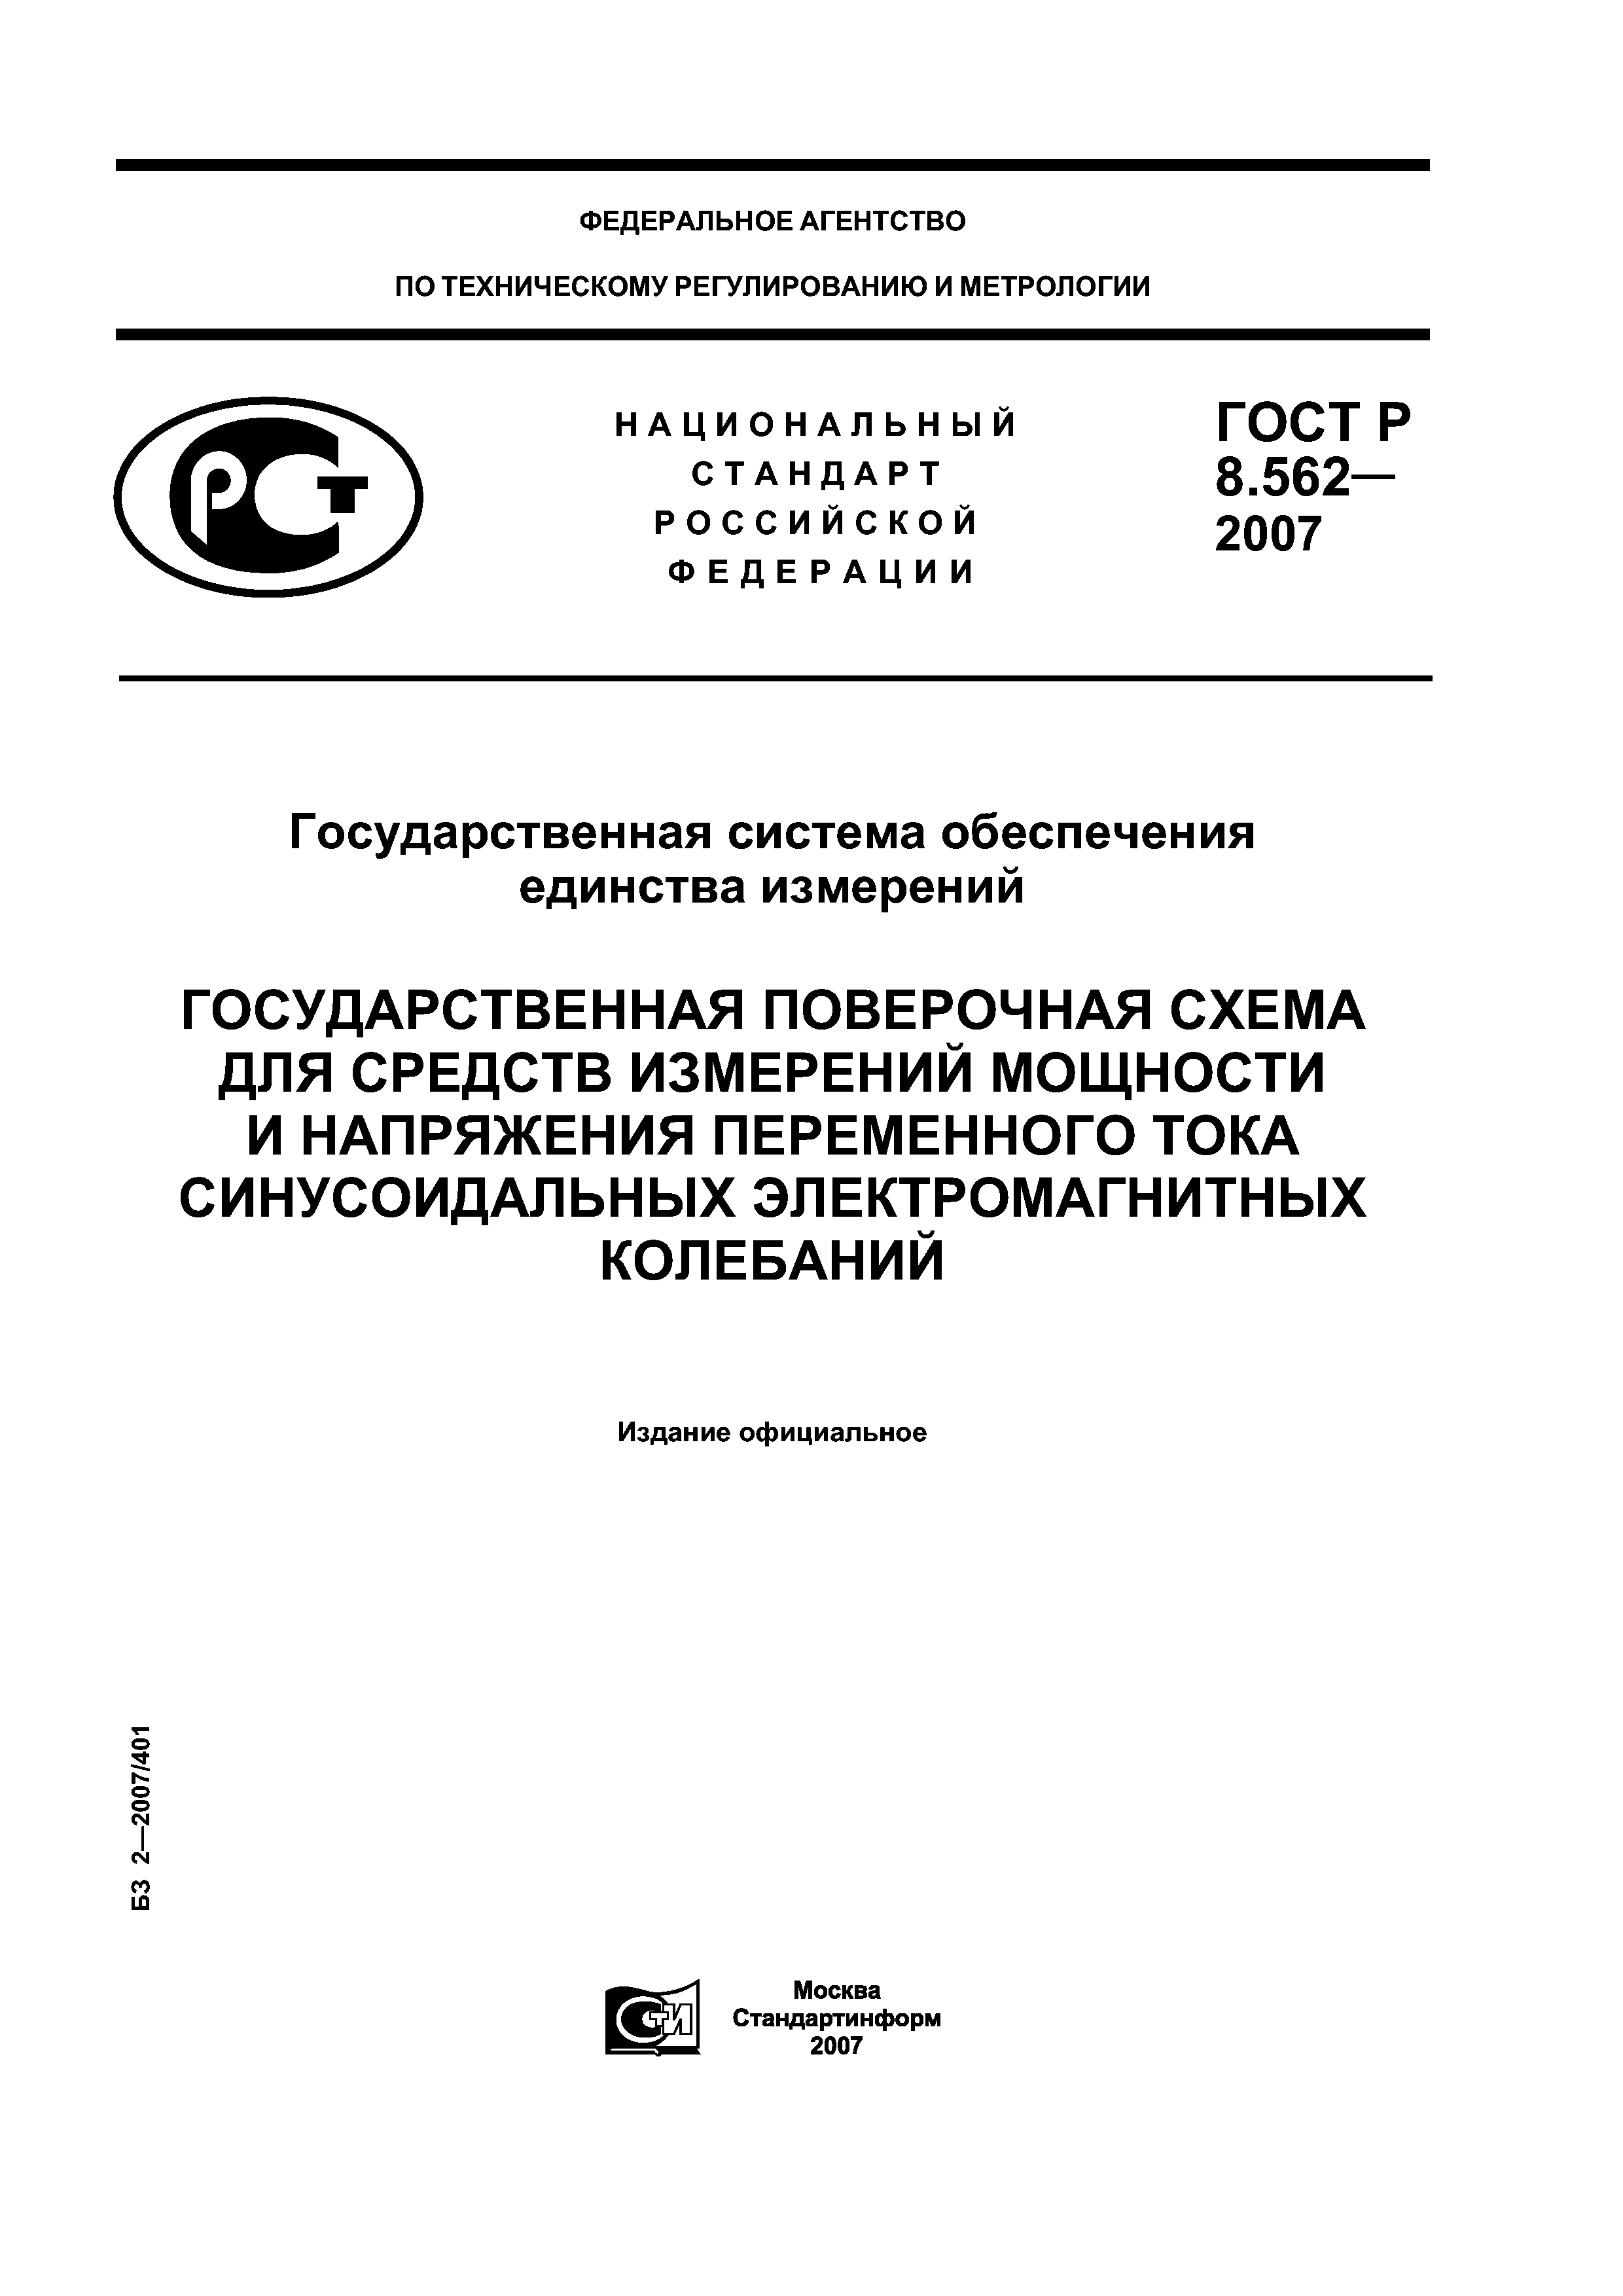 ГОСТ Р 8.562-2007